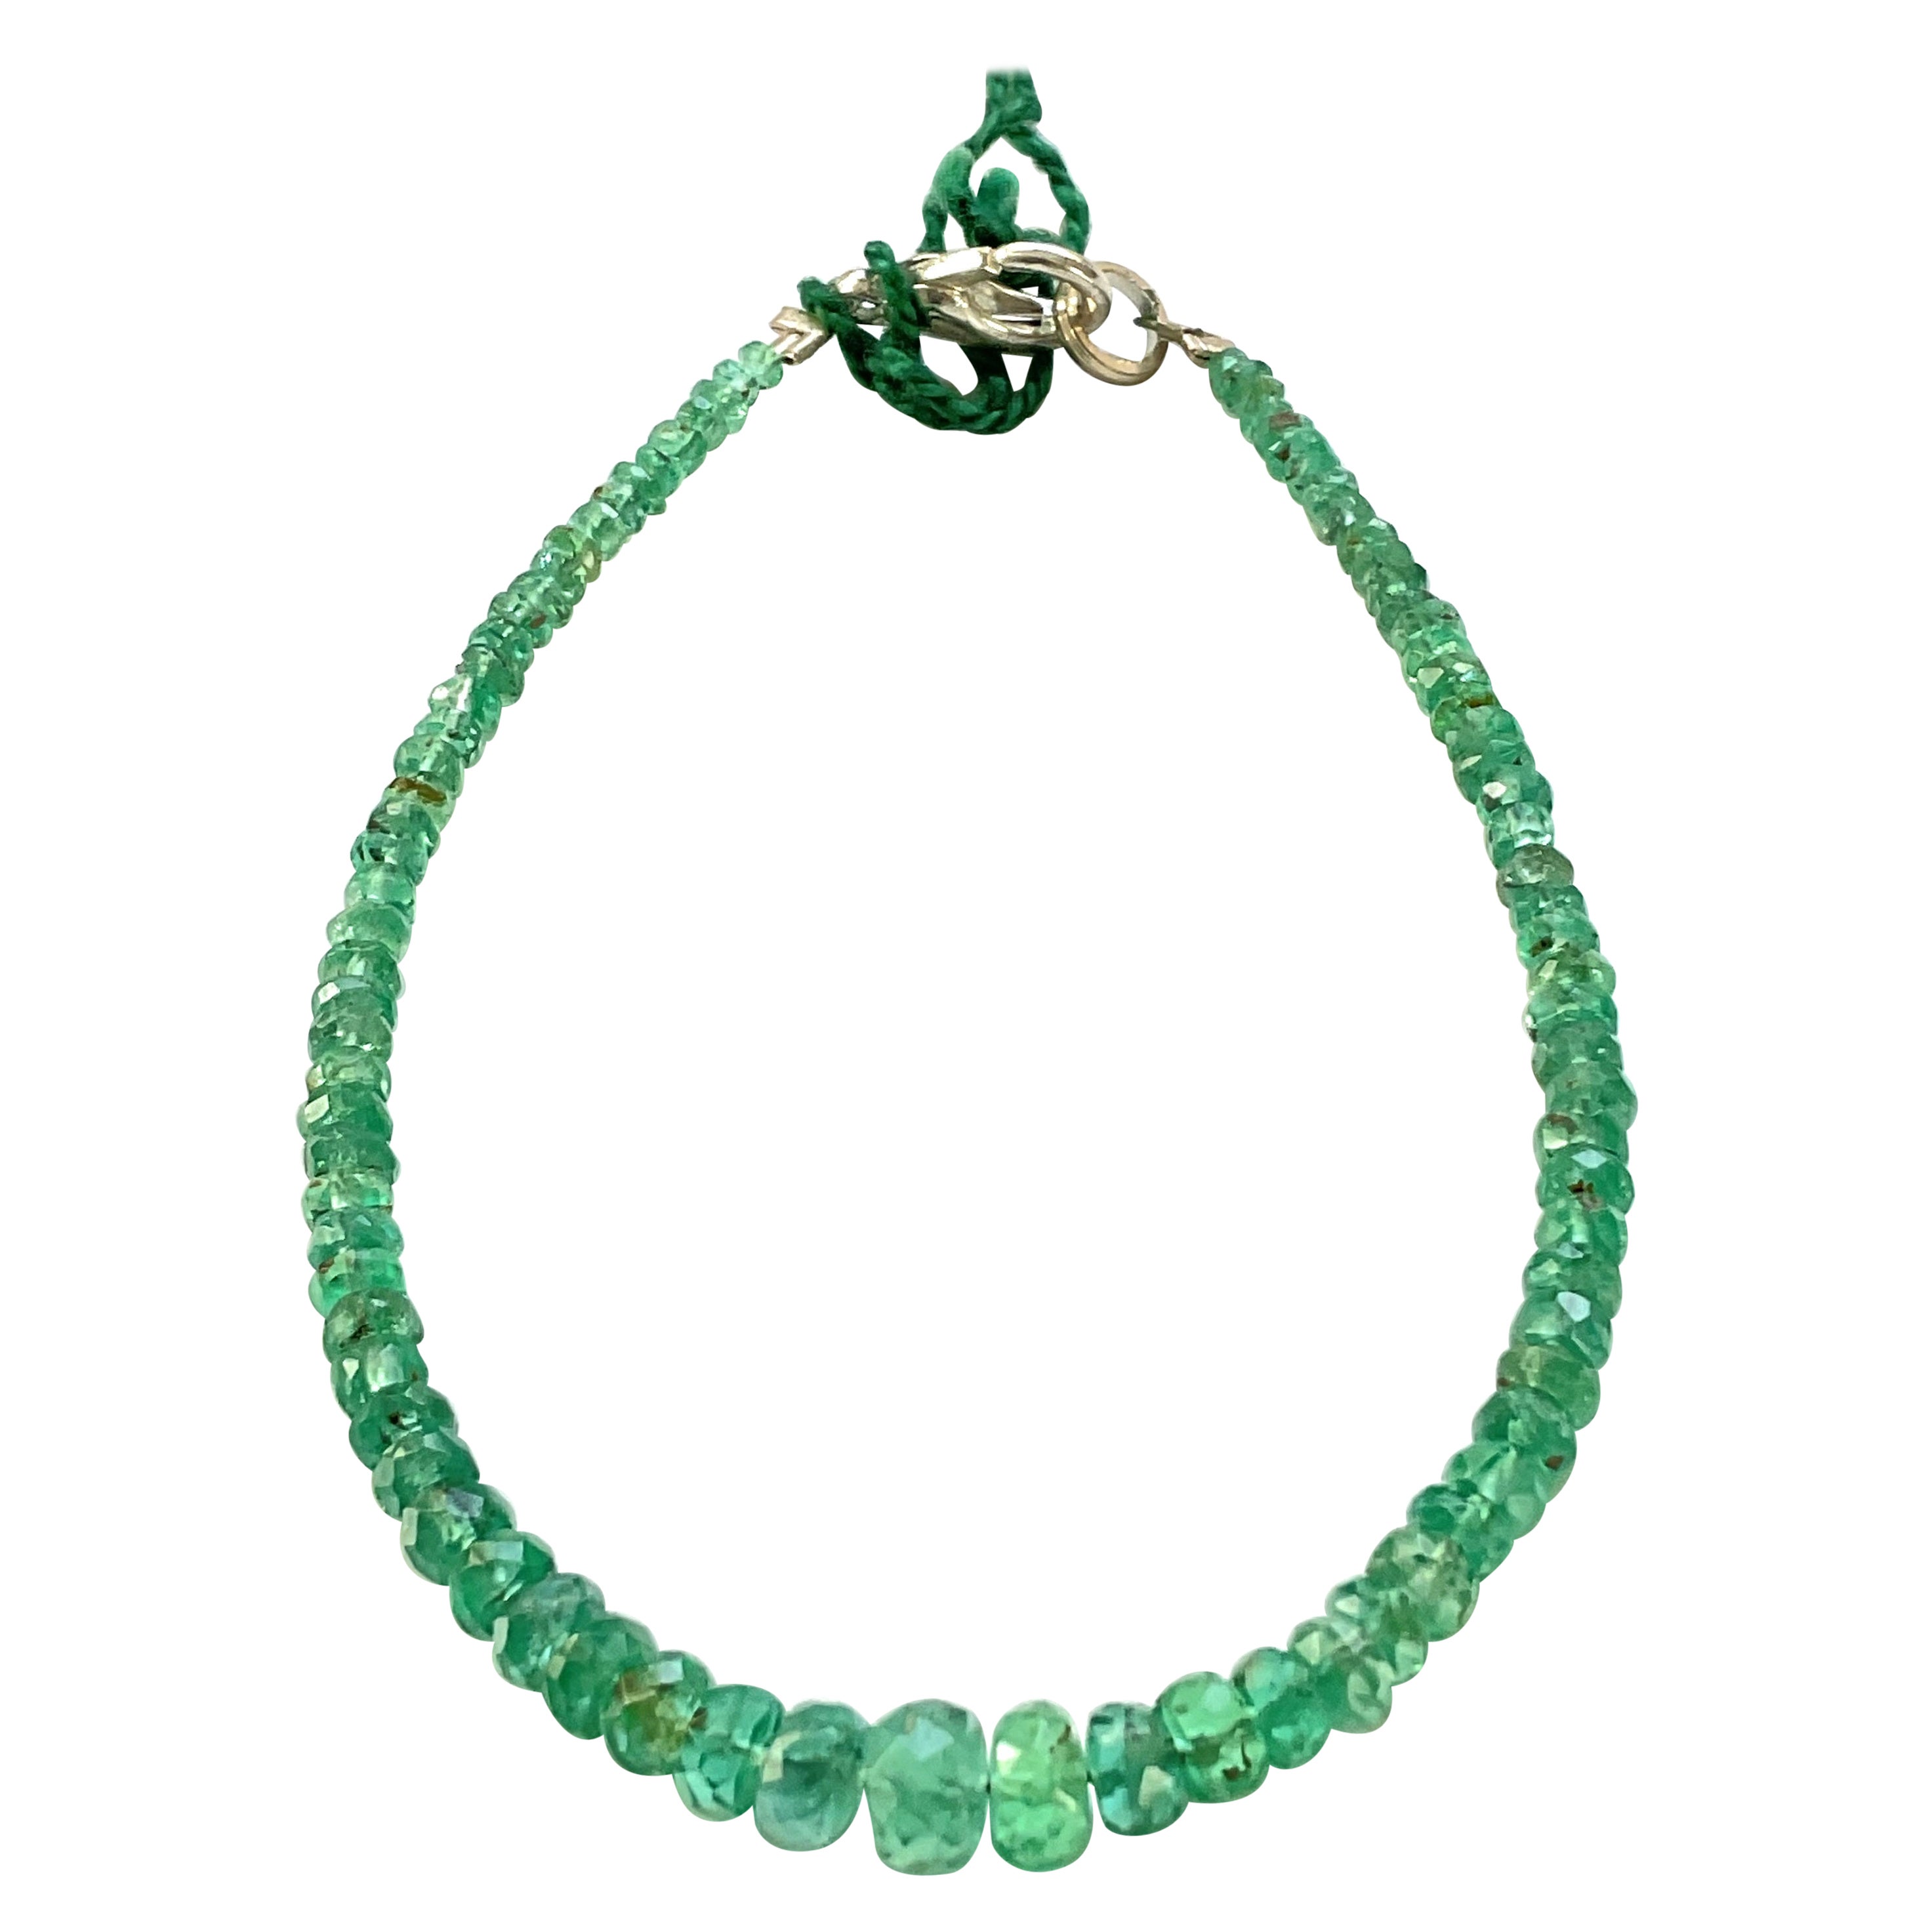 19.75 Carats Panjshir Emerald Faceted Beads Bracelets Jewelry Natural Gemstone